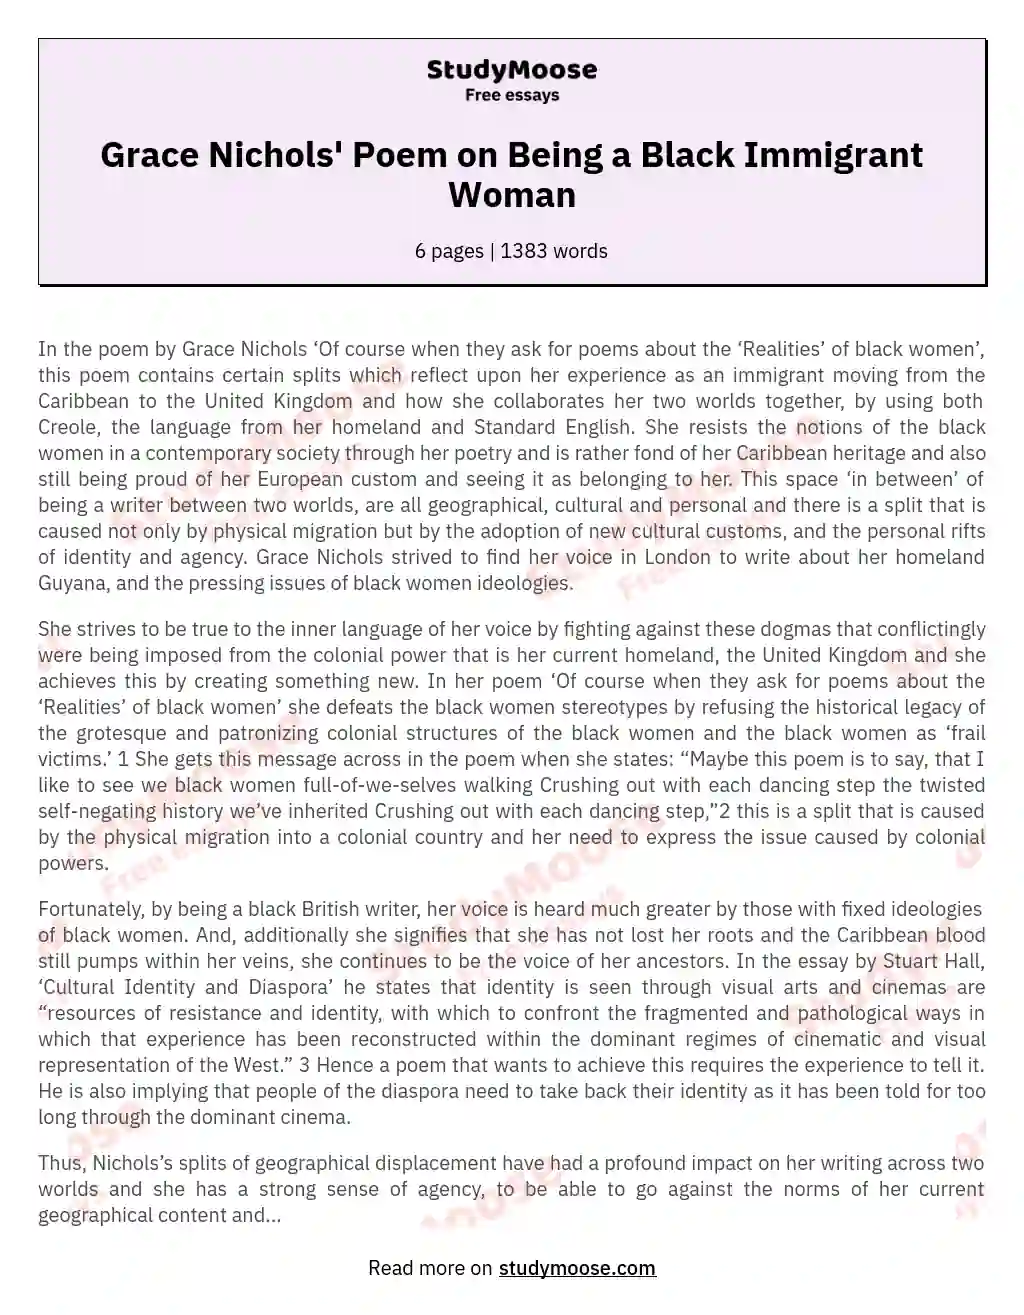 Grace Nichols' Poem on Being a Black Immigrant Woman essay